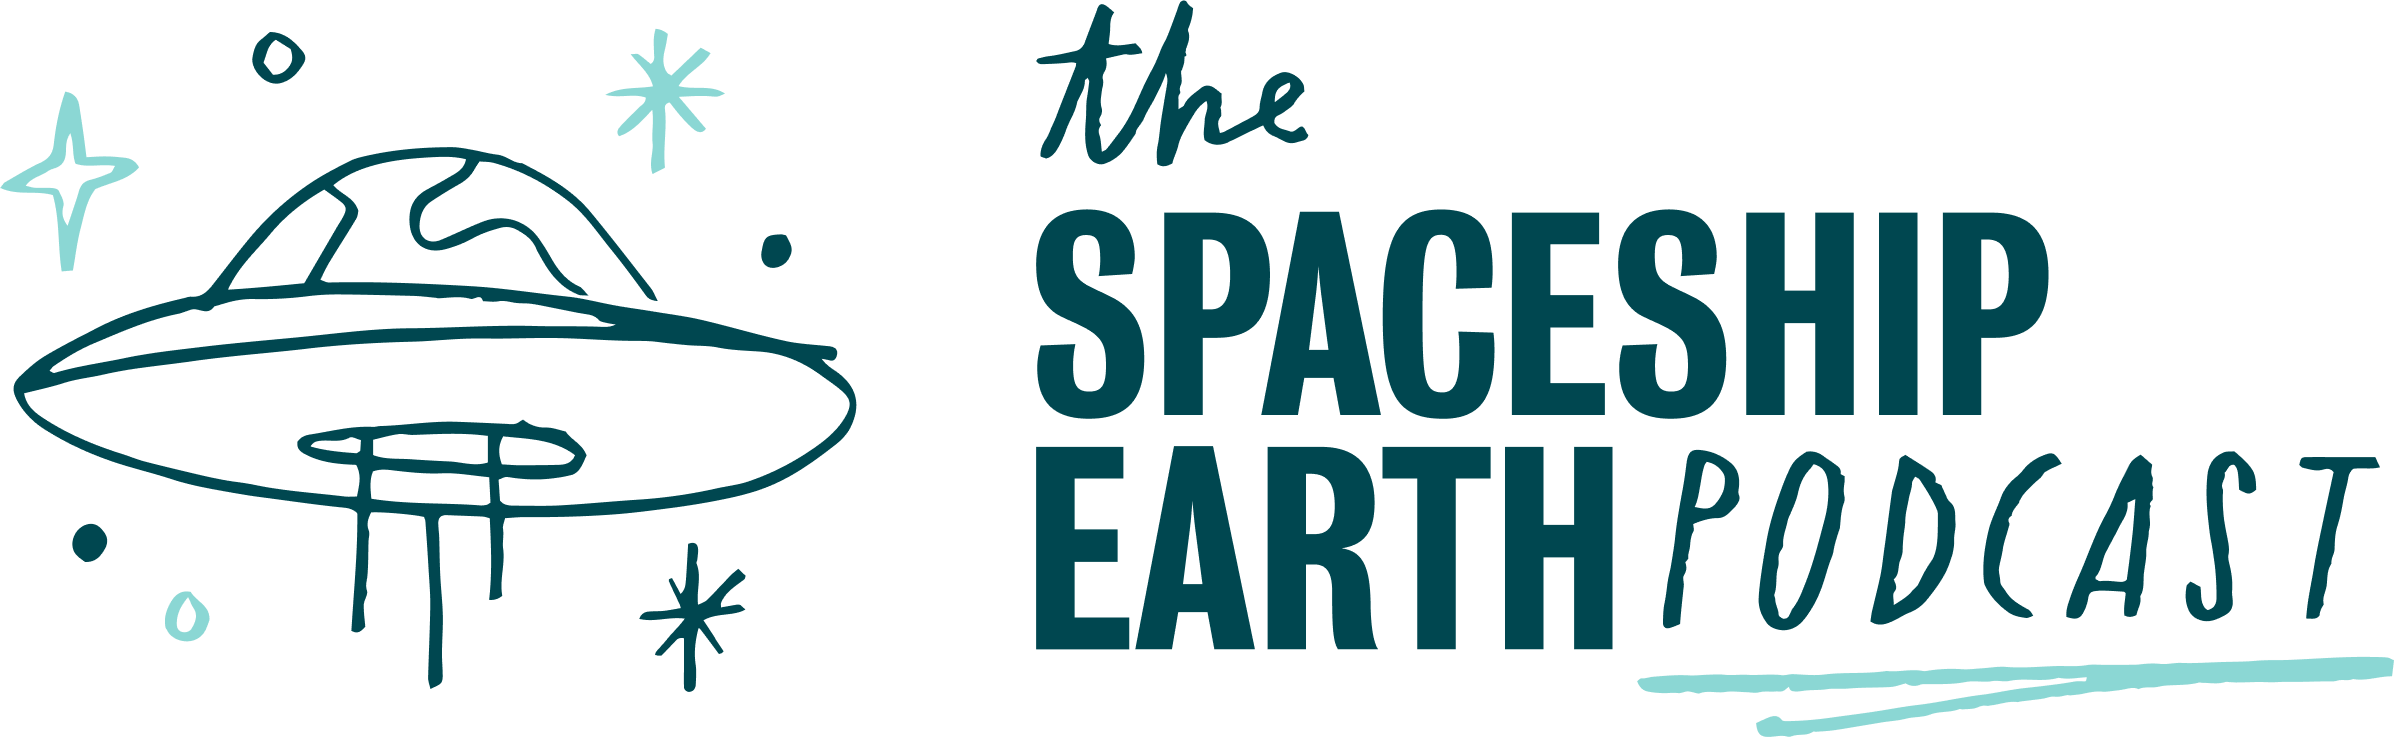 The SpaceShip Earth